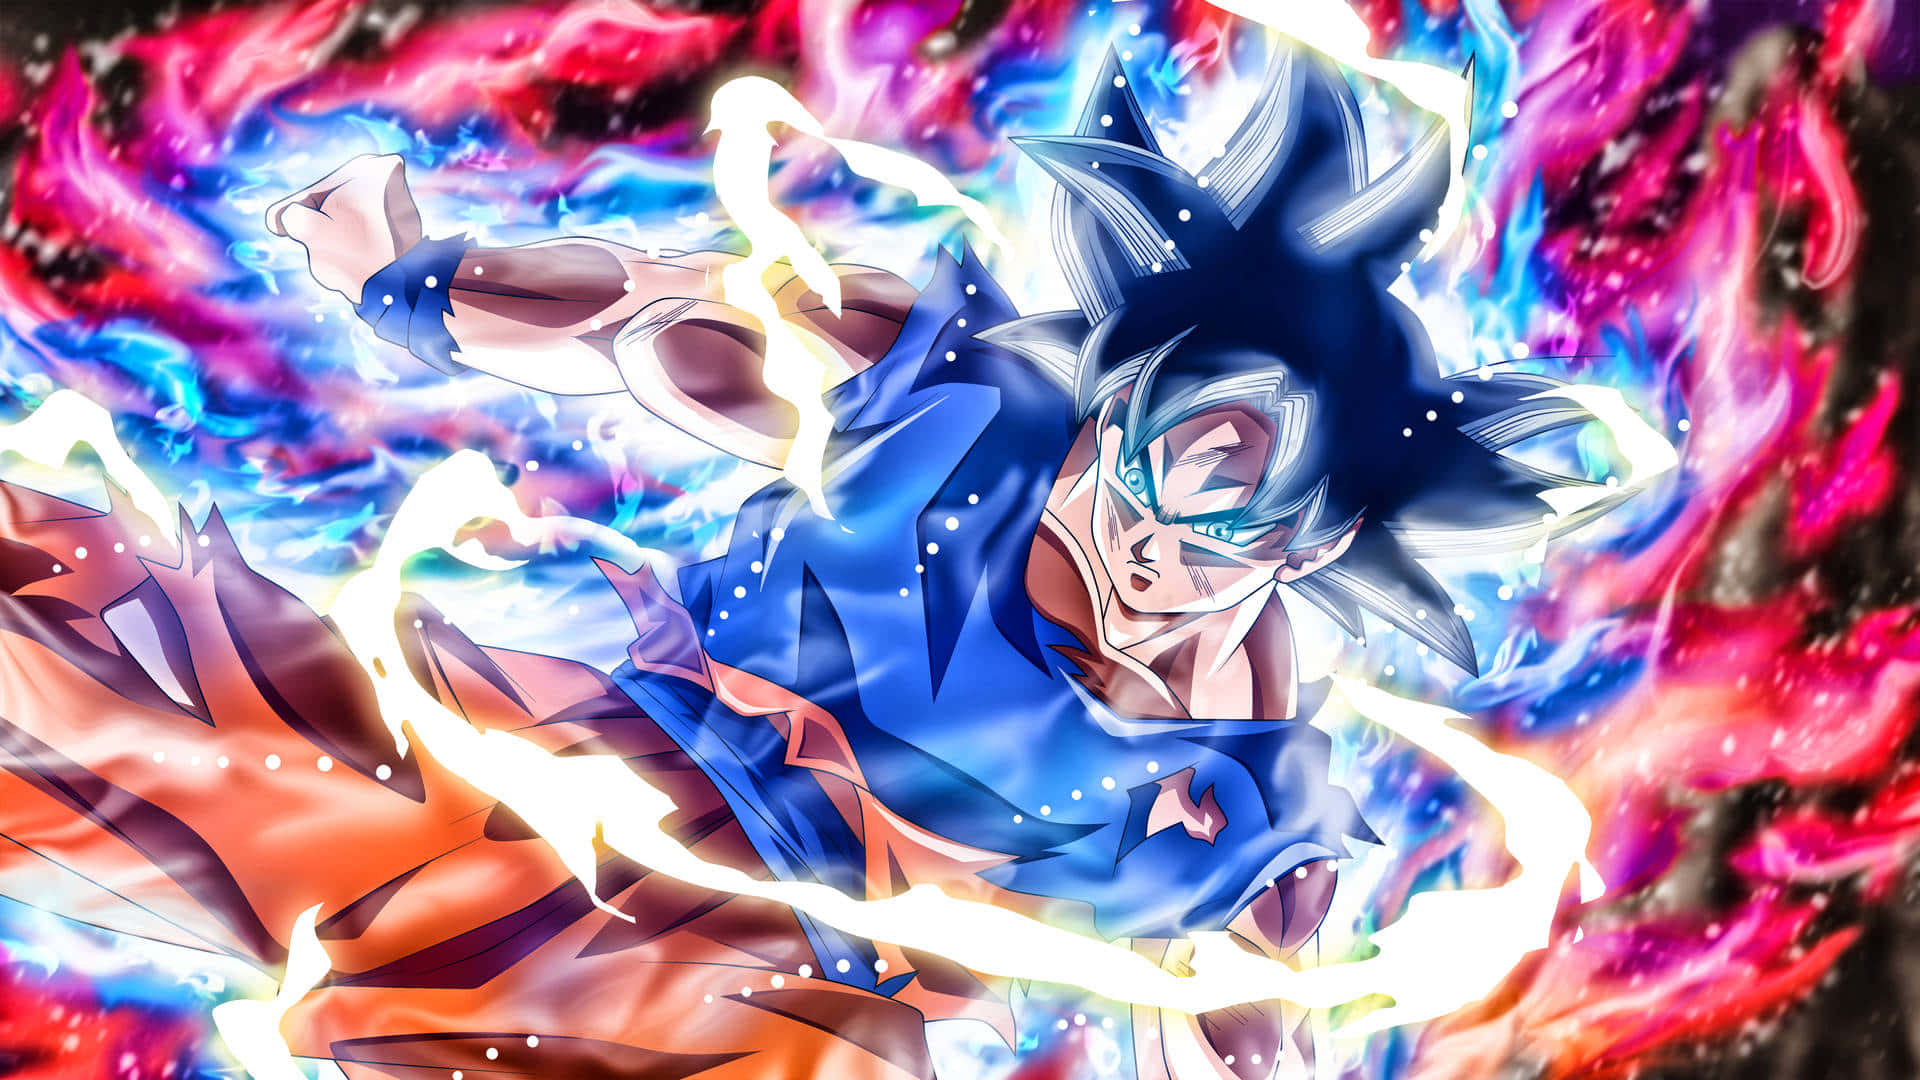 Goku unleashes his Ultra Instinct power!